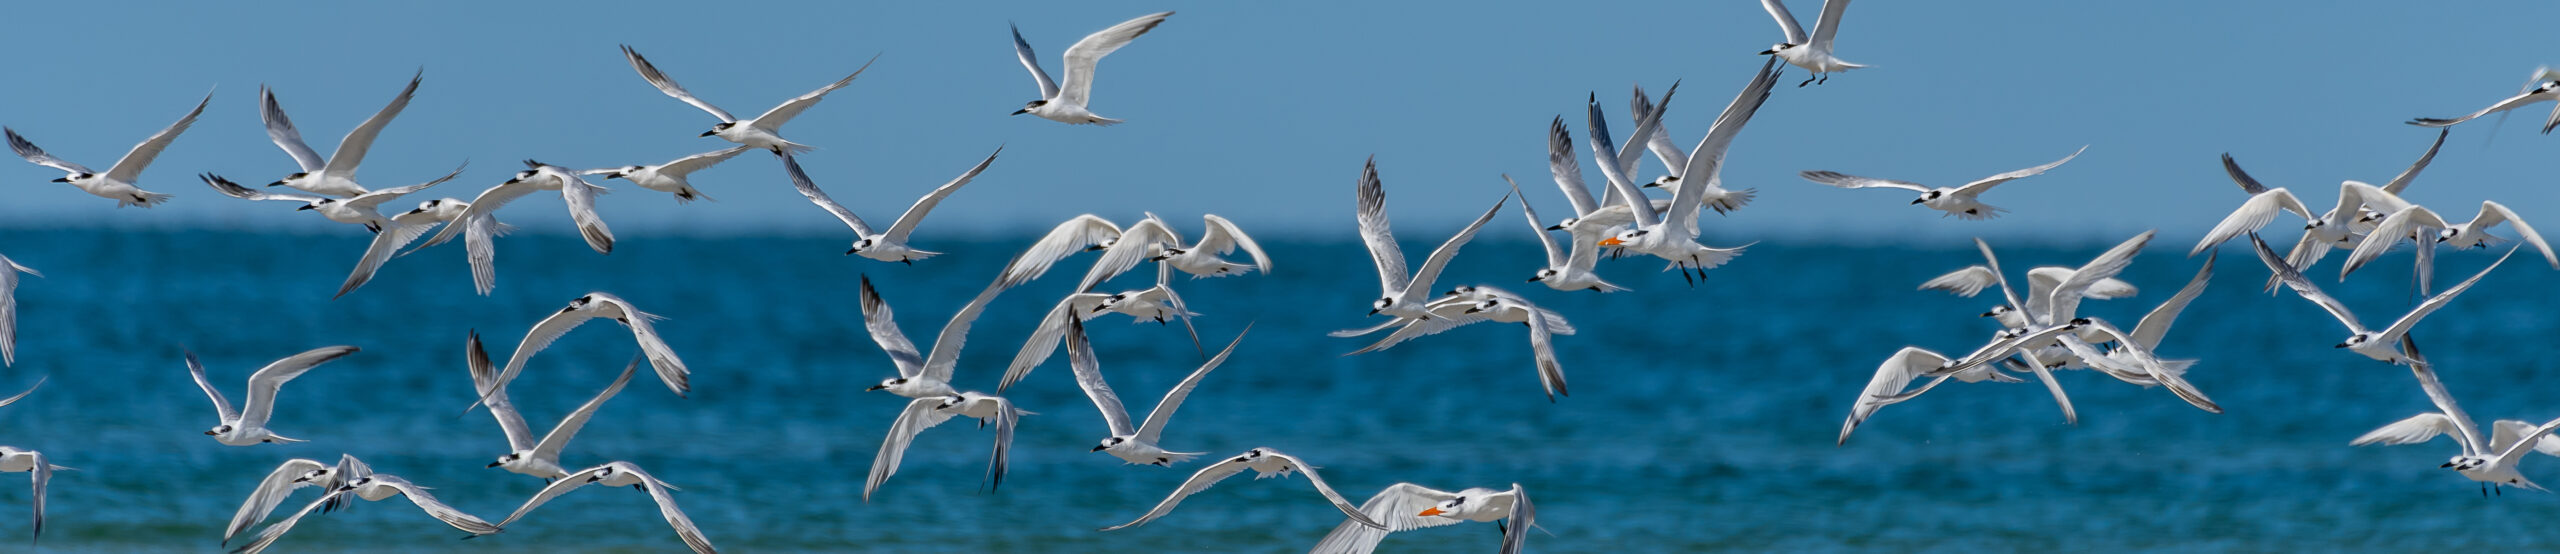 Flock of royal terns